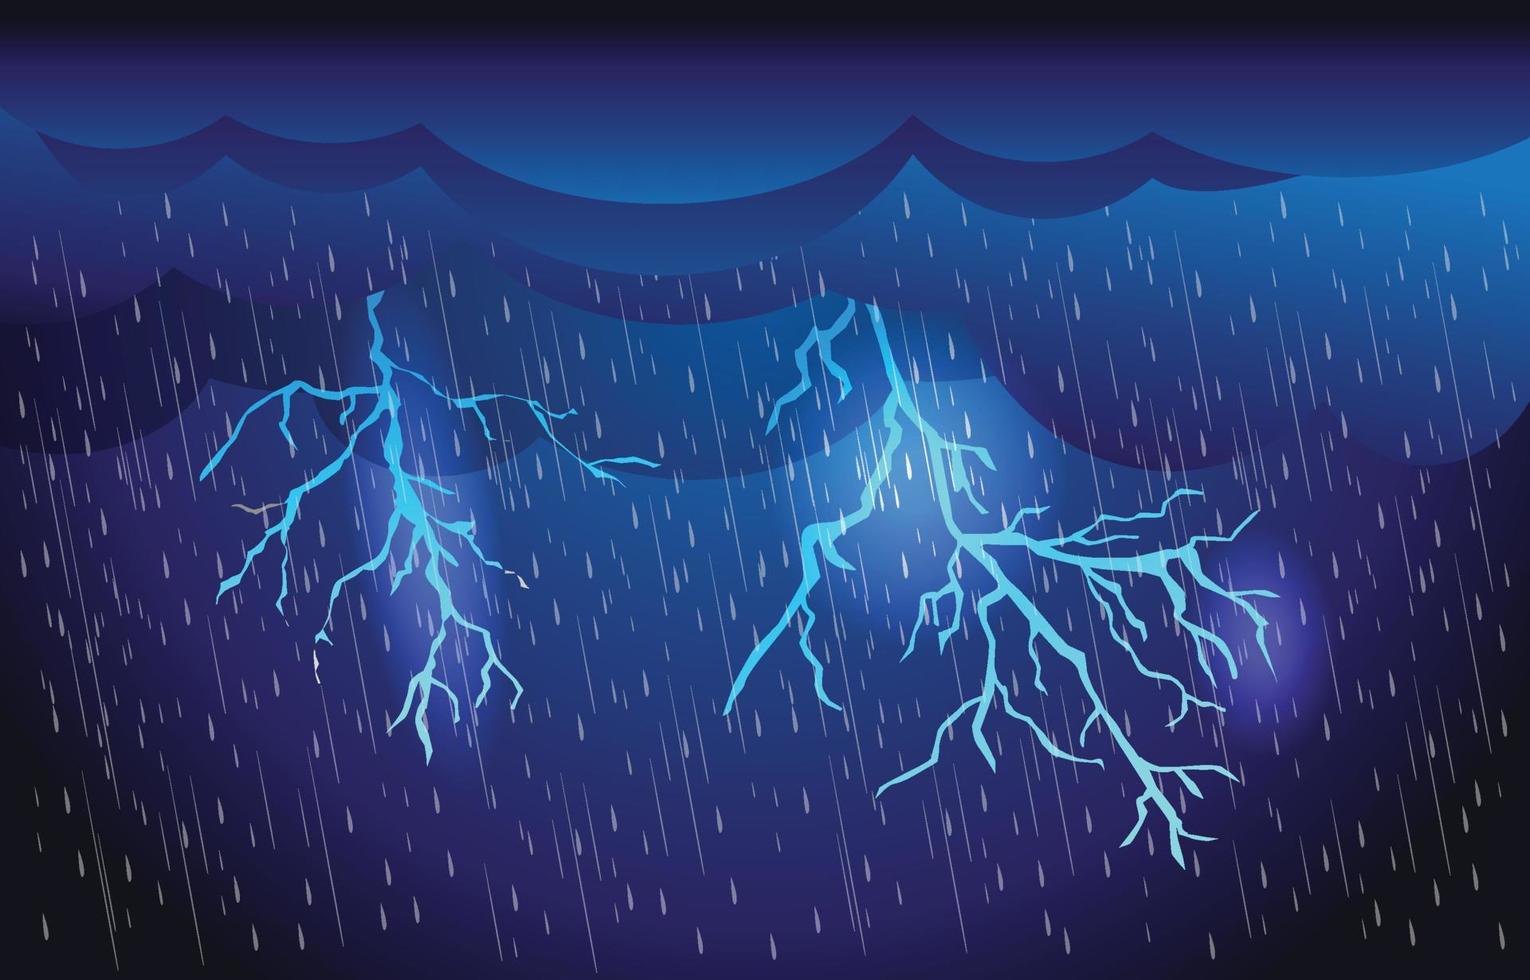 Heavy rain in dark sky, thunder lightning and clouds ,rainy season,  lightning storm,  Flood natural disaster, weather nature background, vector illustration.